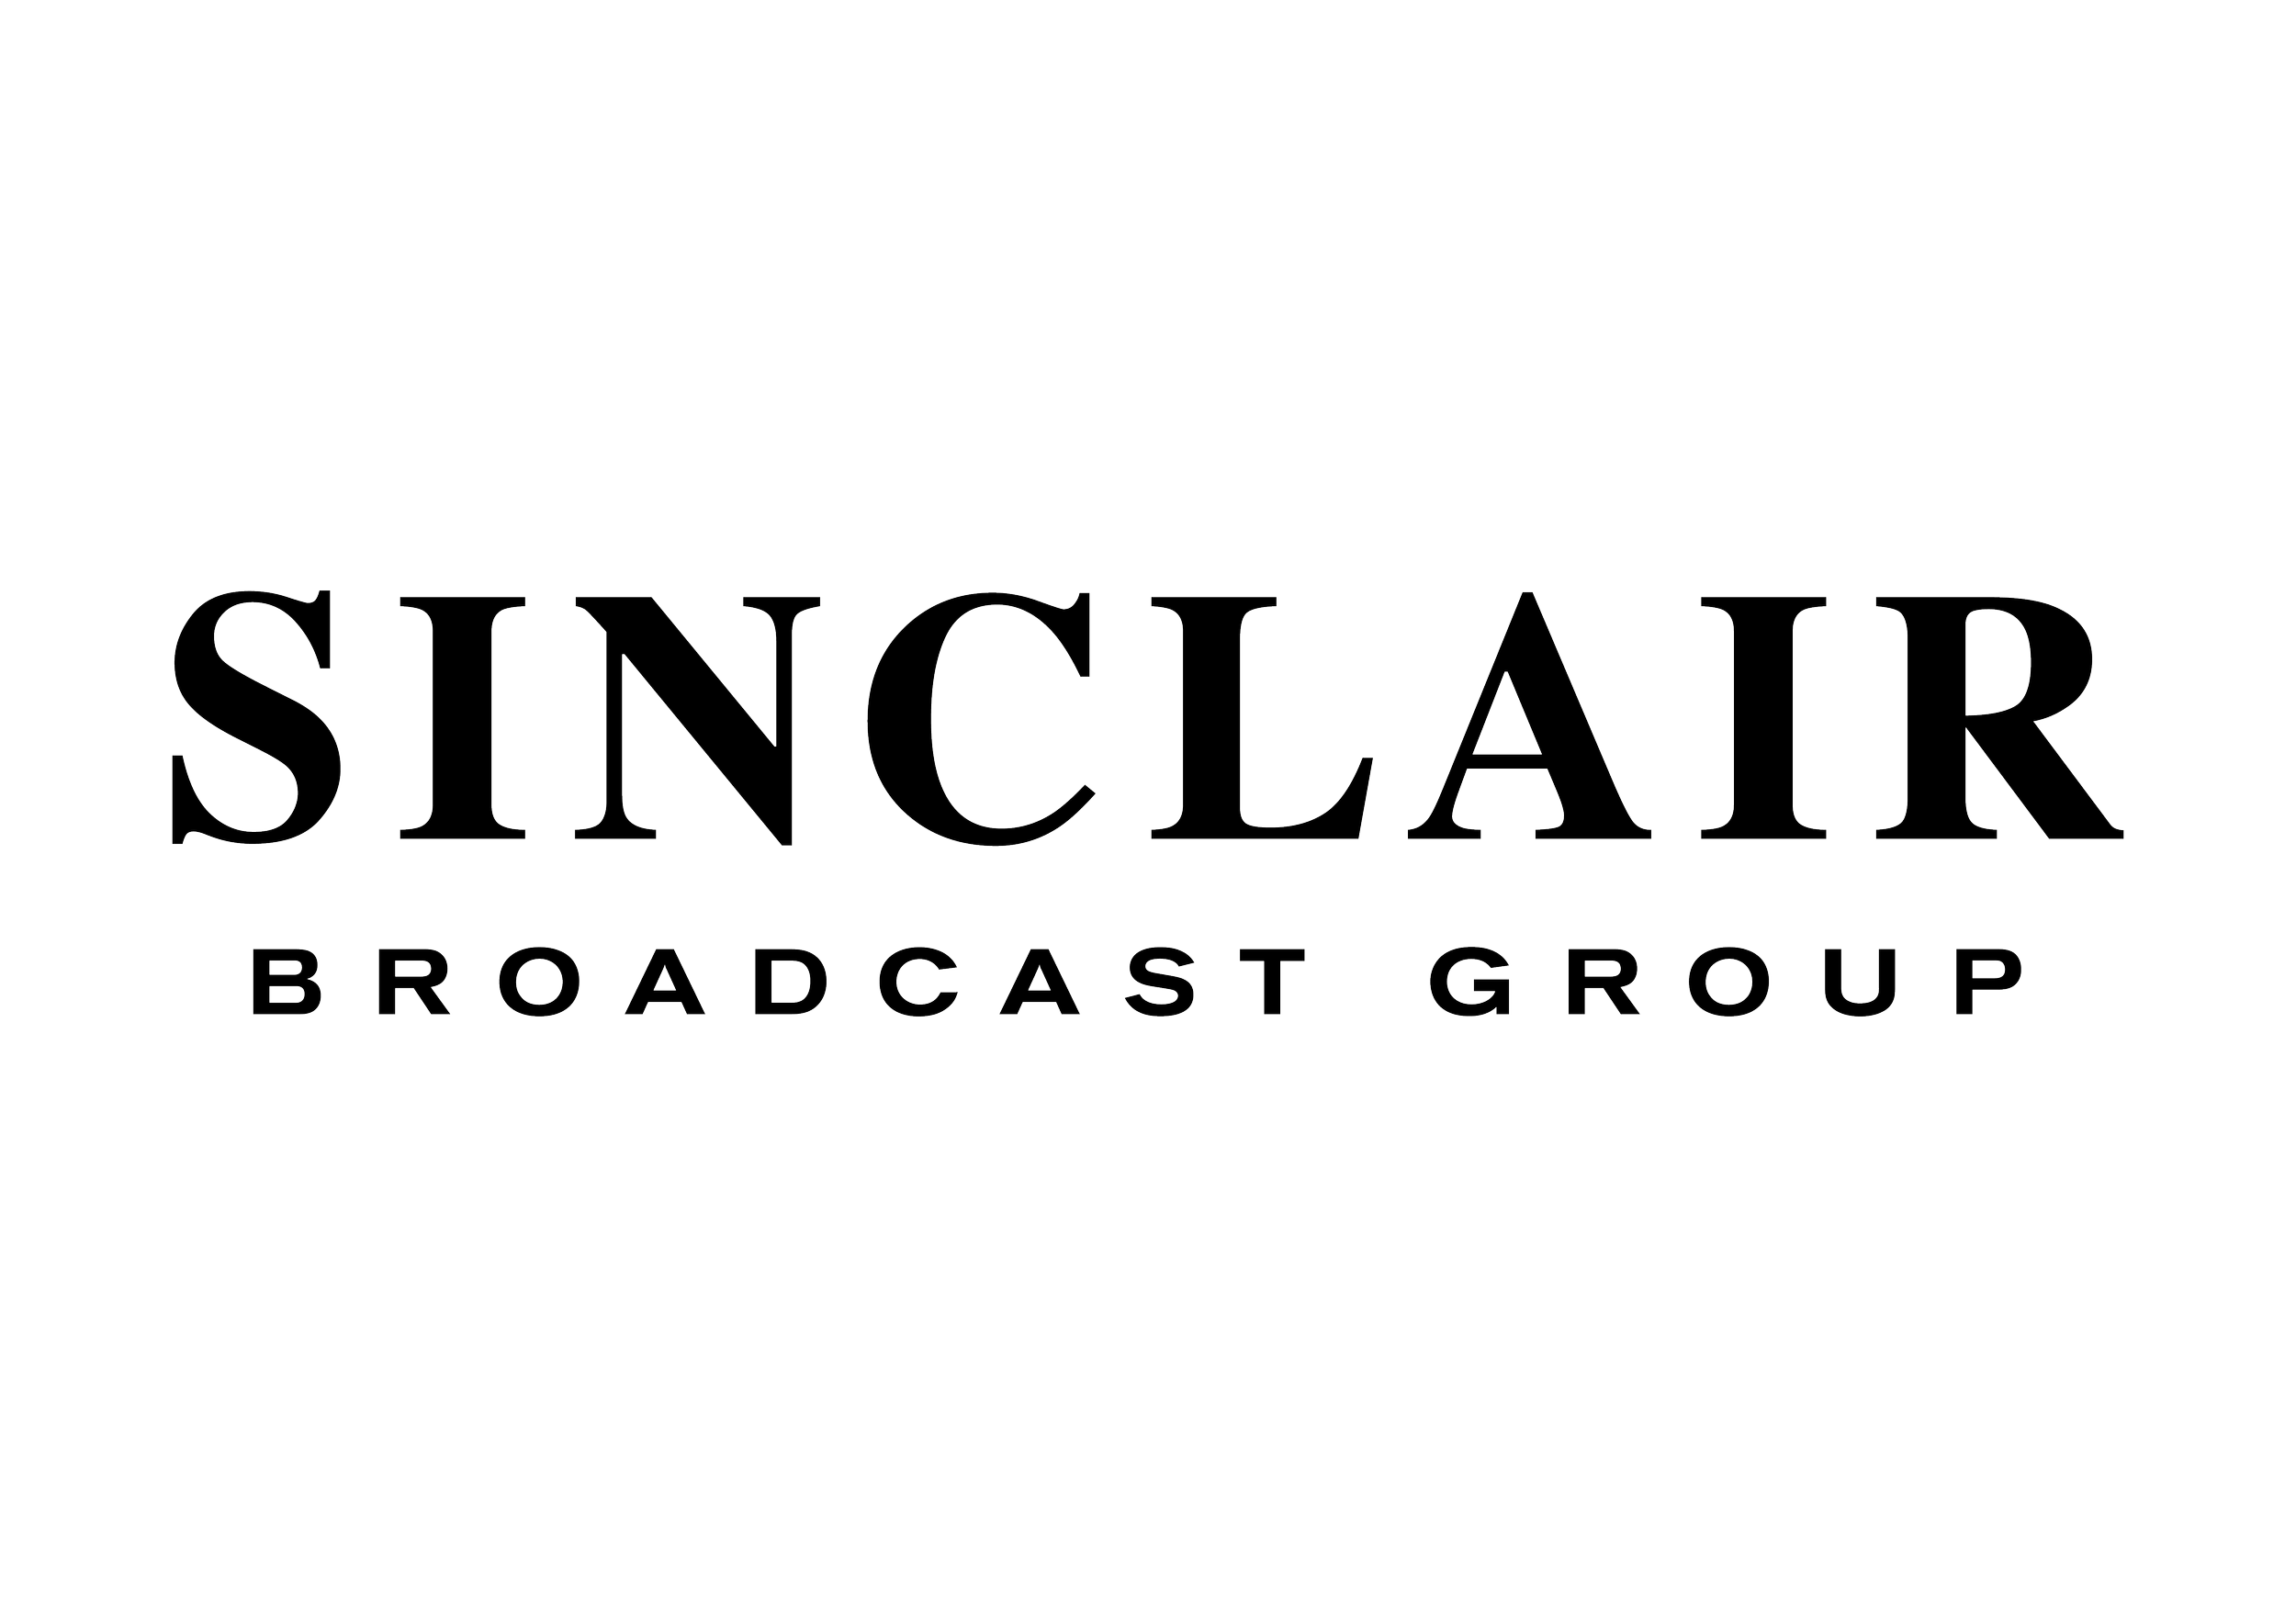 Sinclair Logo.png